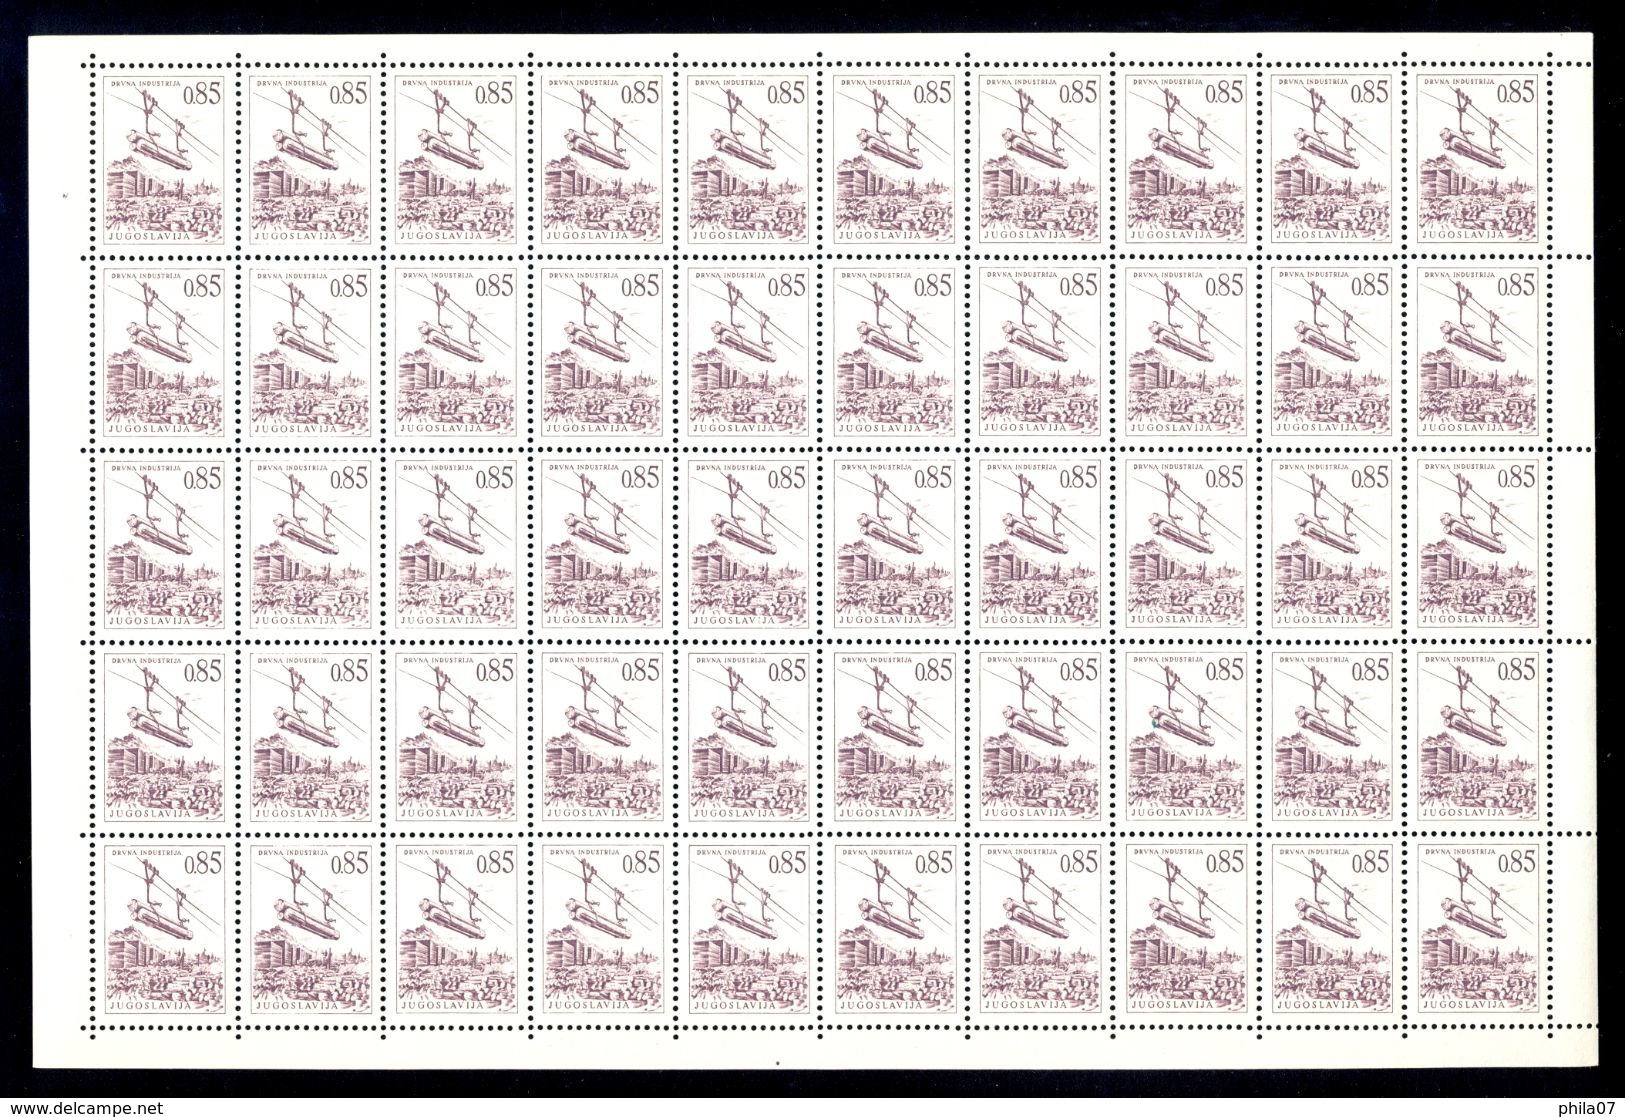 Yugoslavia - Mi.No. 1164/1172, complete series in sheet, stamp Mi.No. 1170 left vertical edge in brown color / 10 scans